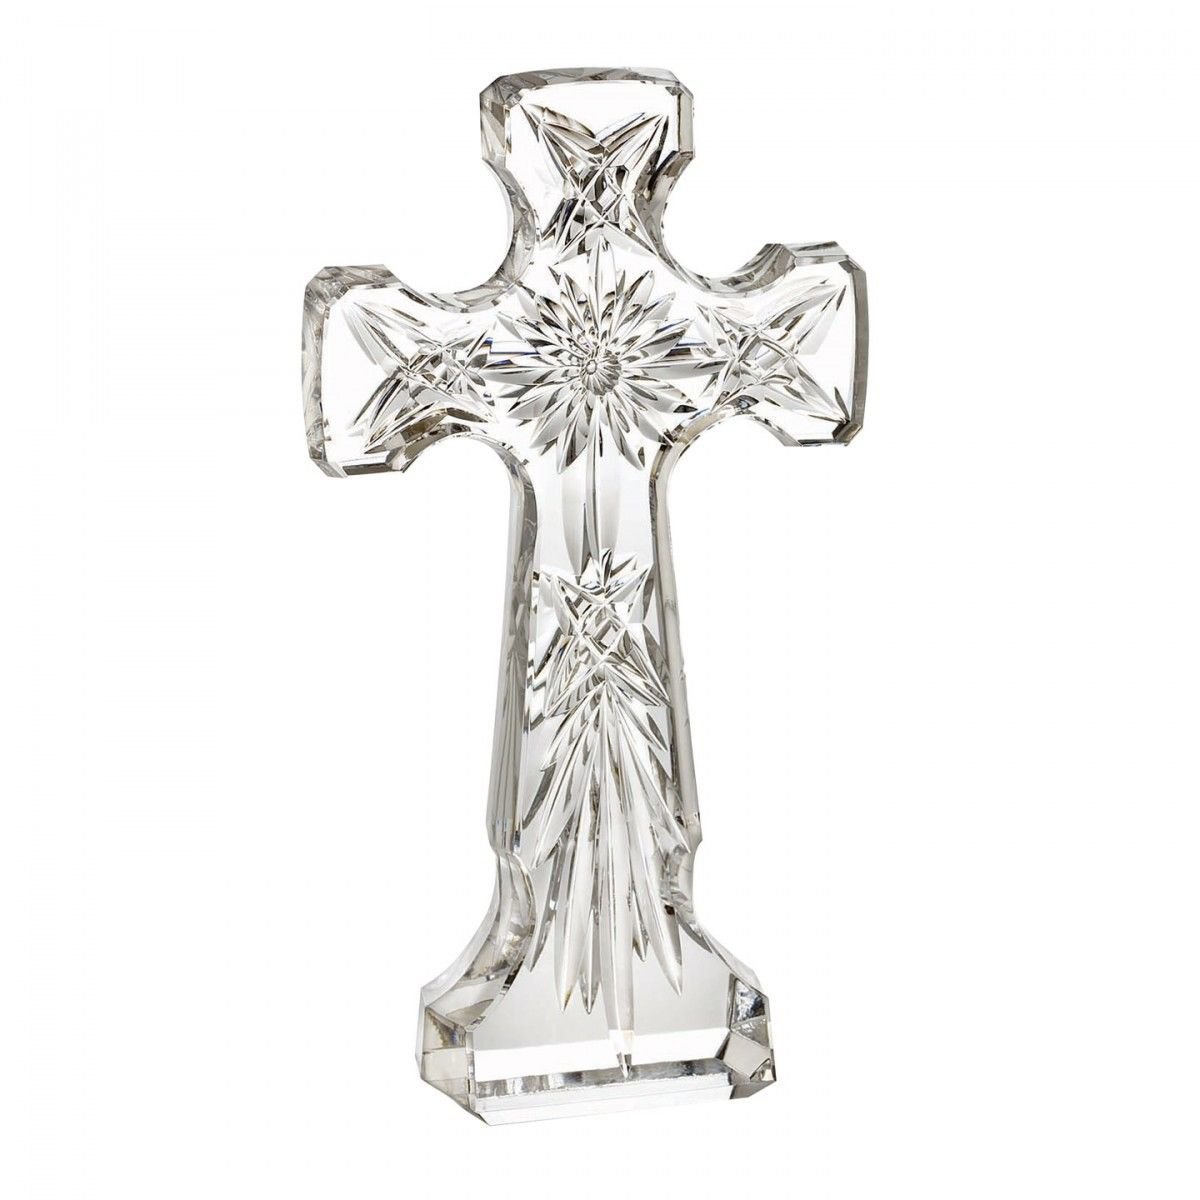 Cross standing. Waterford Crystal крест. Кристаллический крест. Waterford Crystal купить крест.